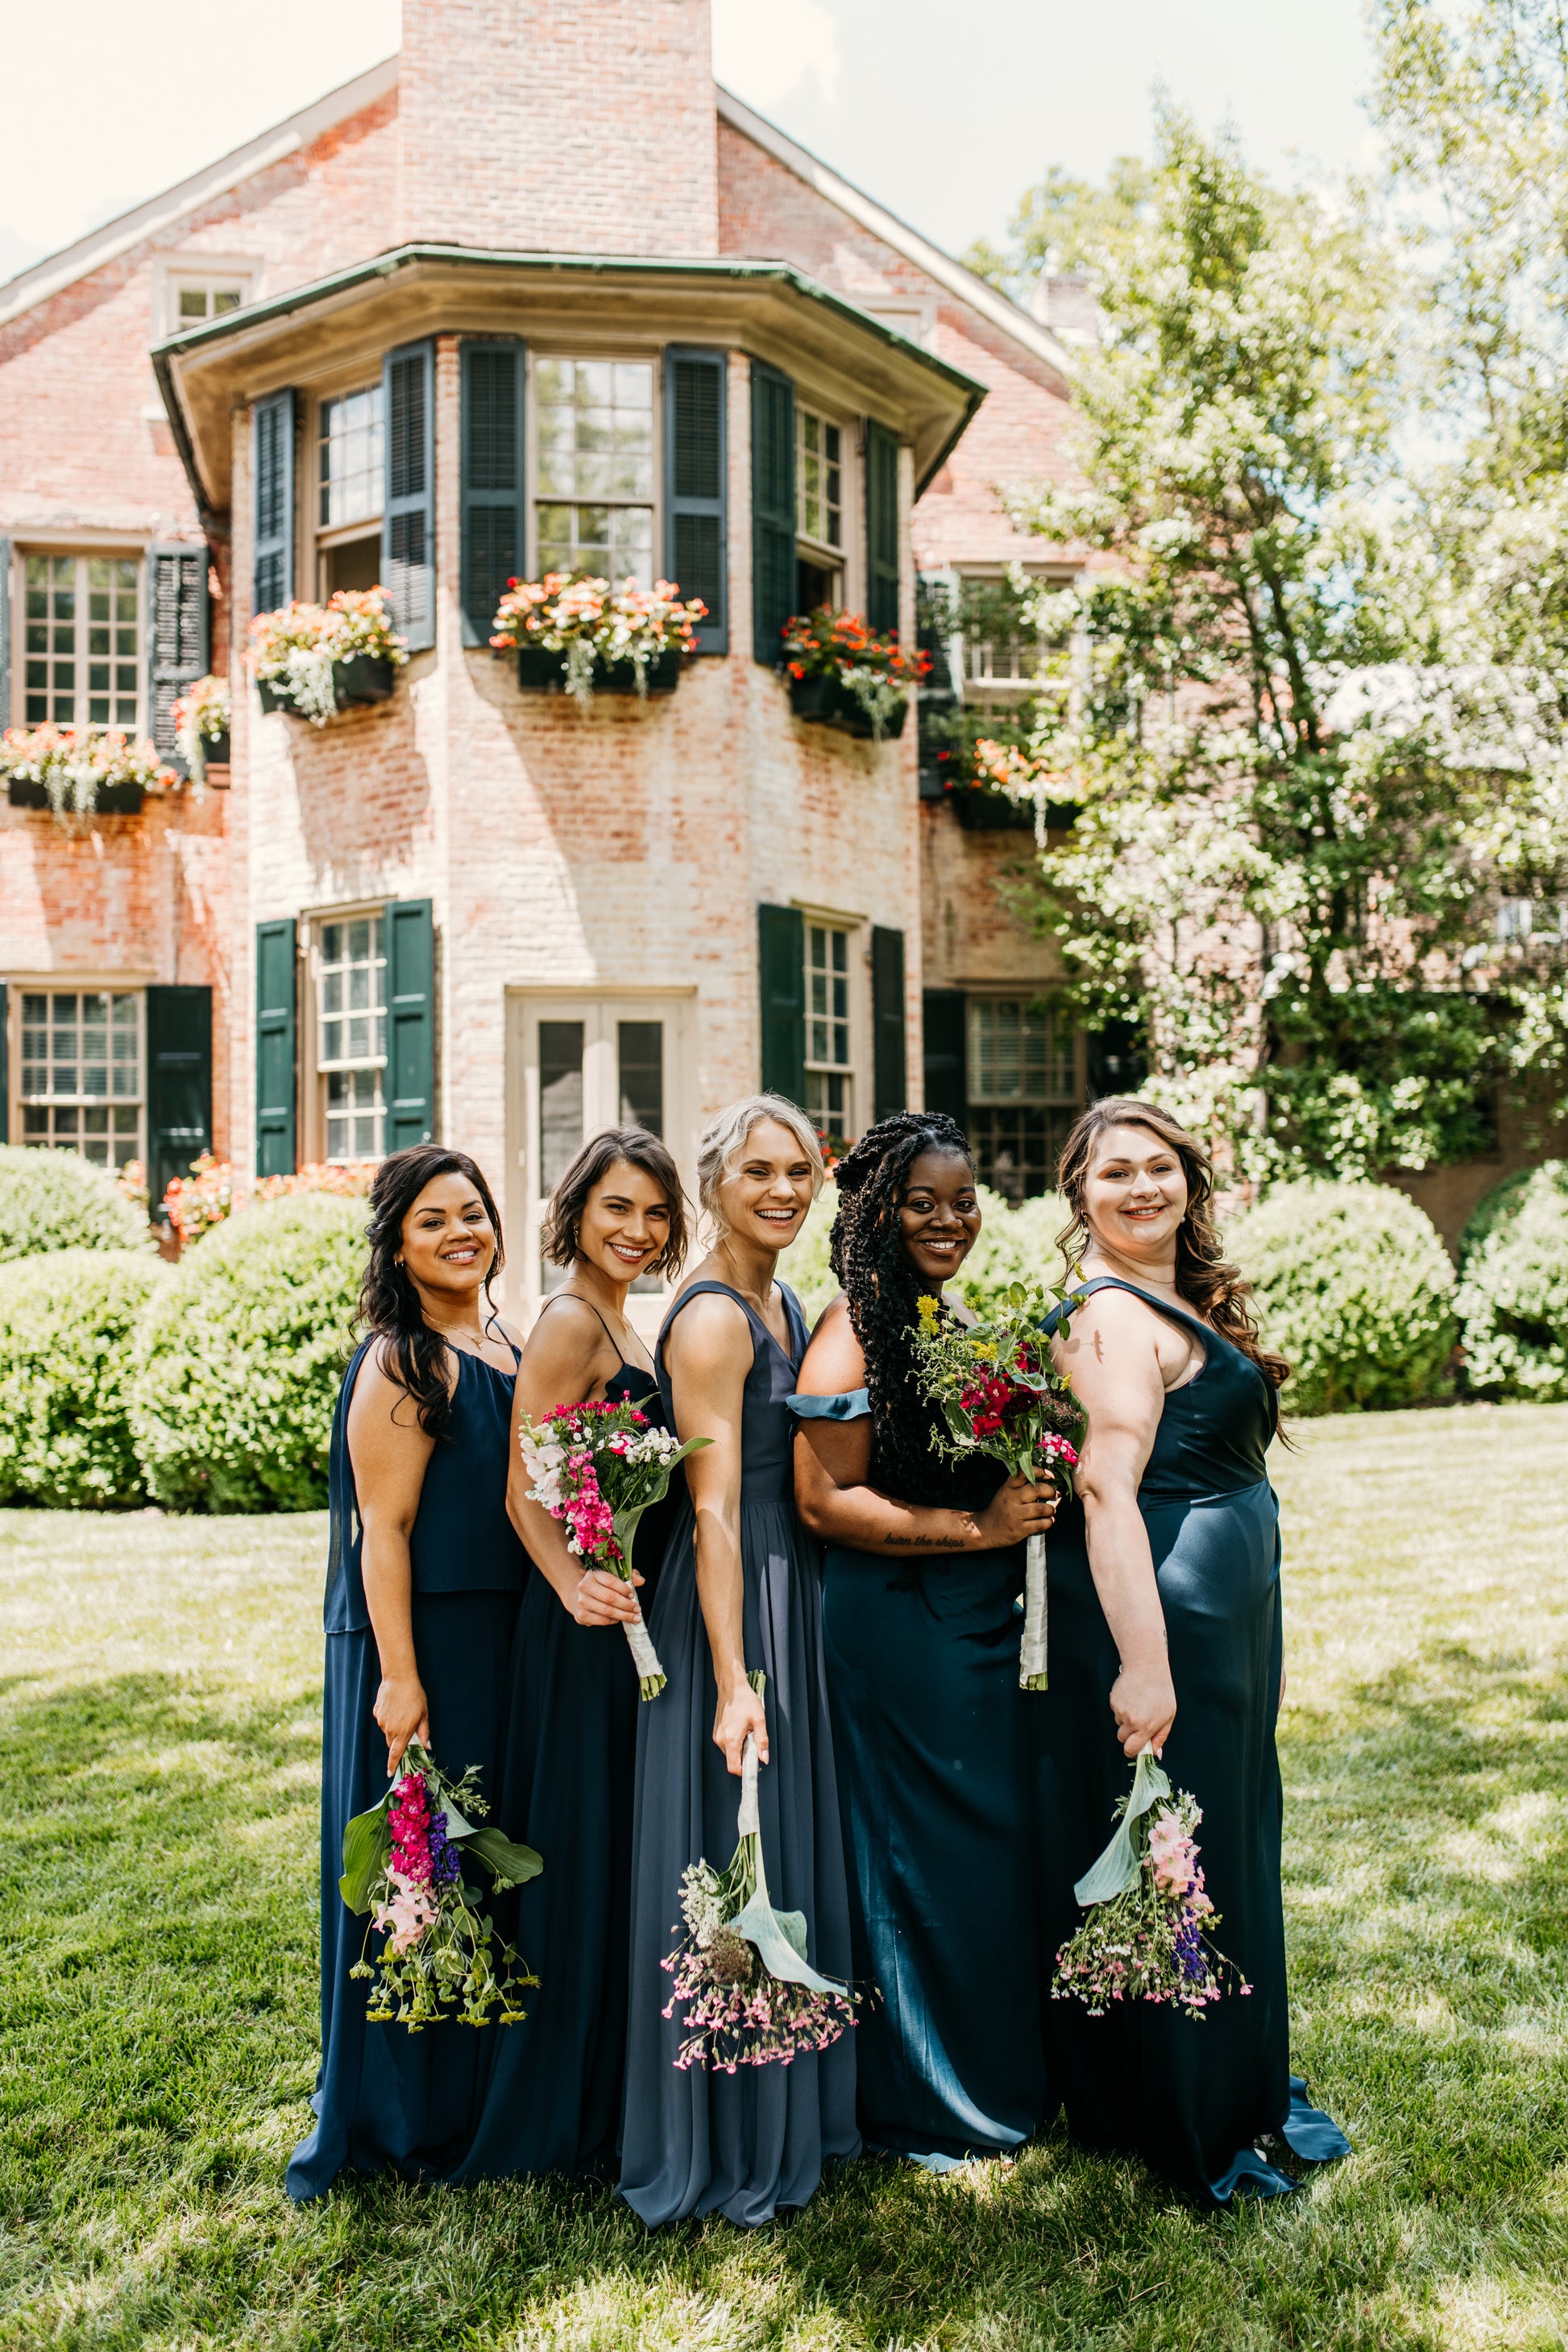 Erin (center) wears the Willow dress